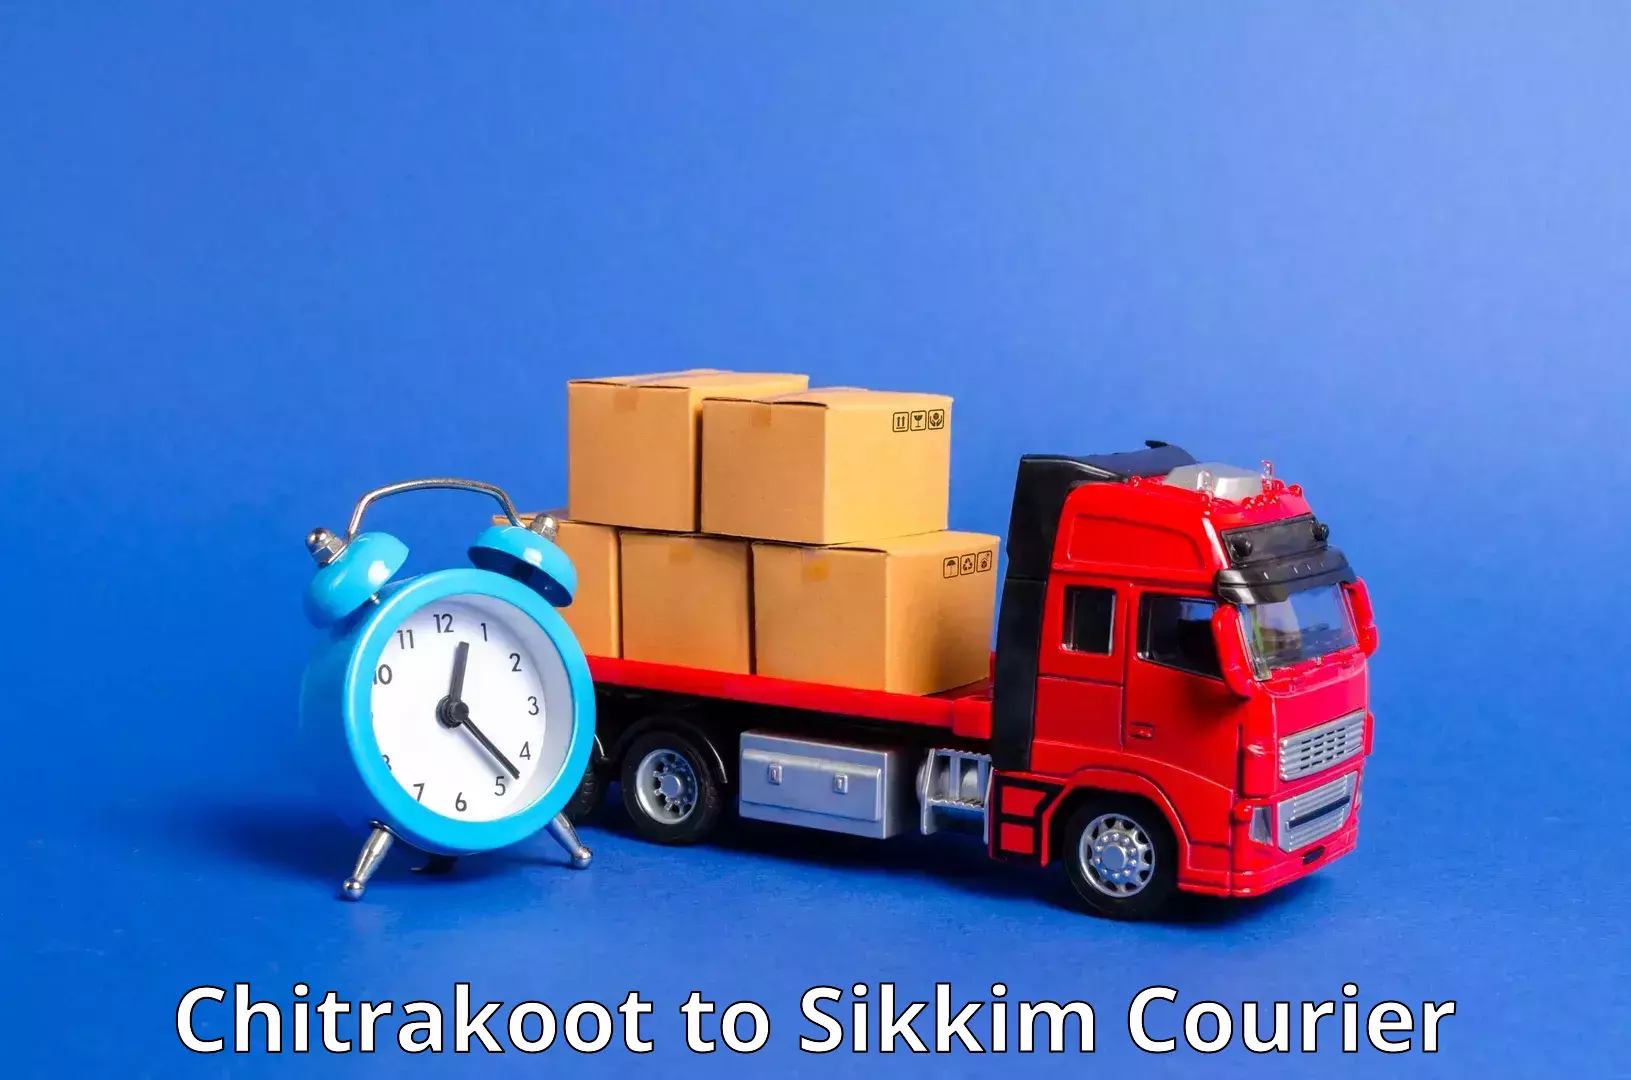 Doorstep delivery service Chitrakoot to Gangtok